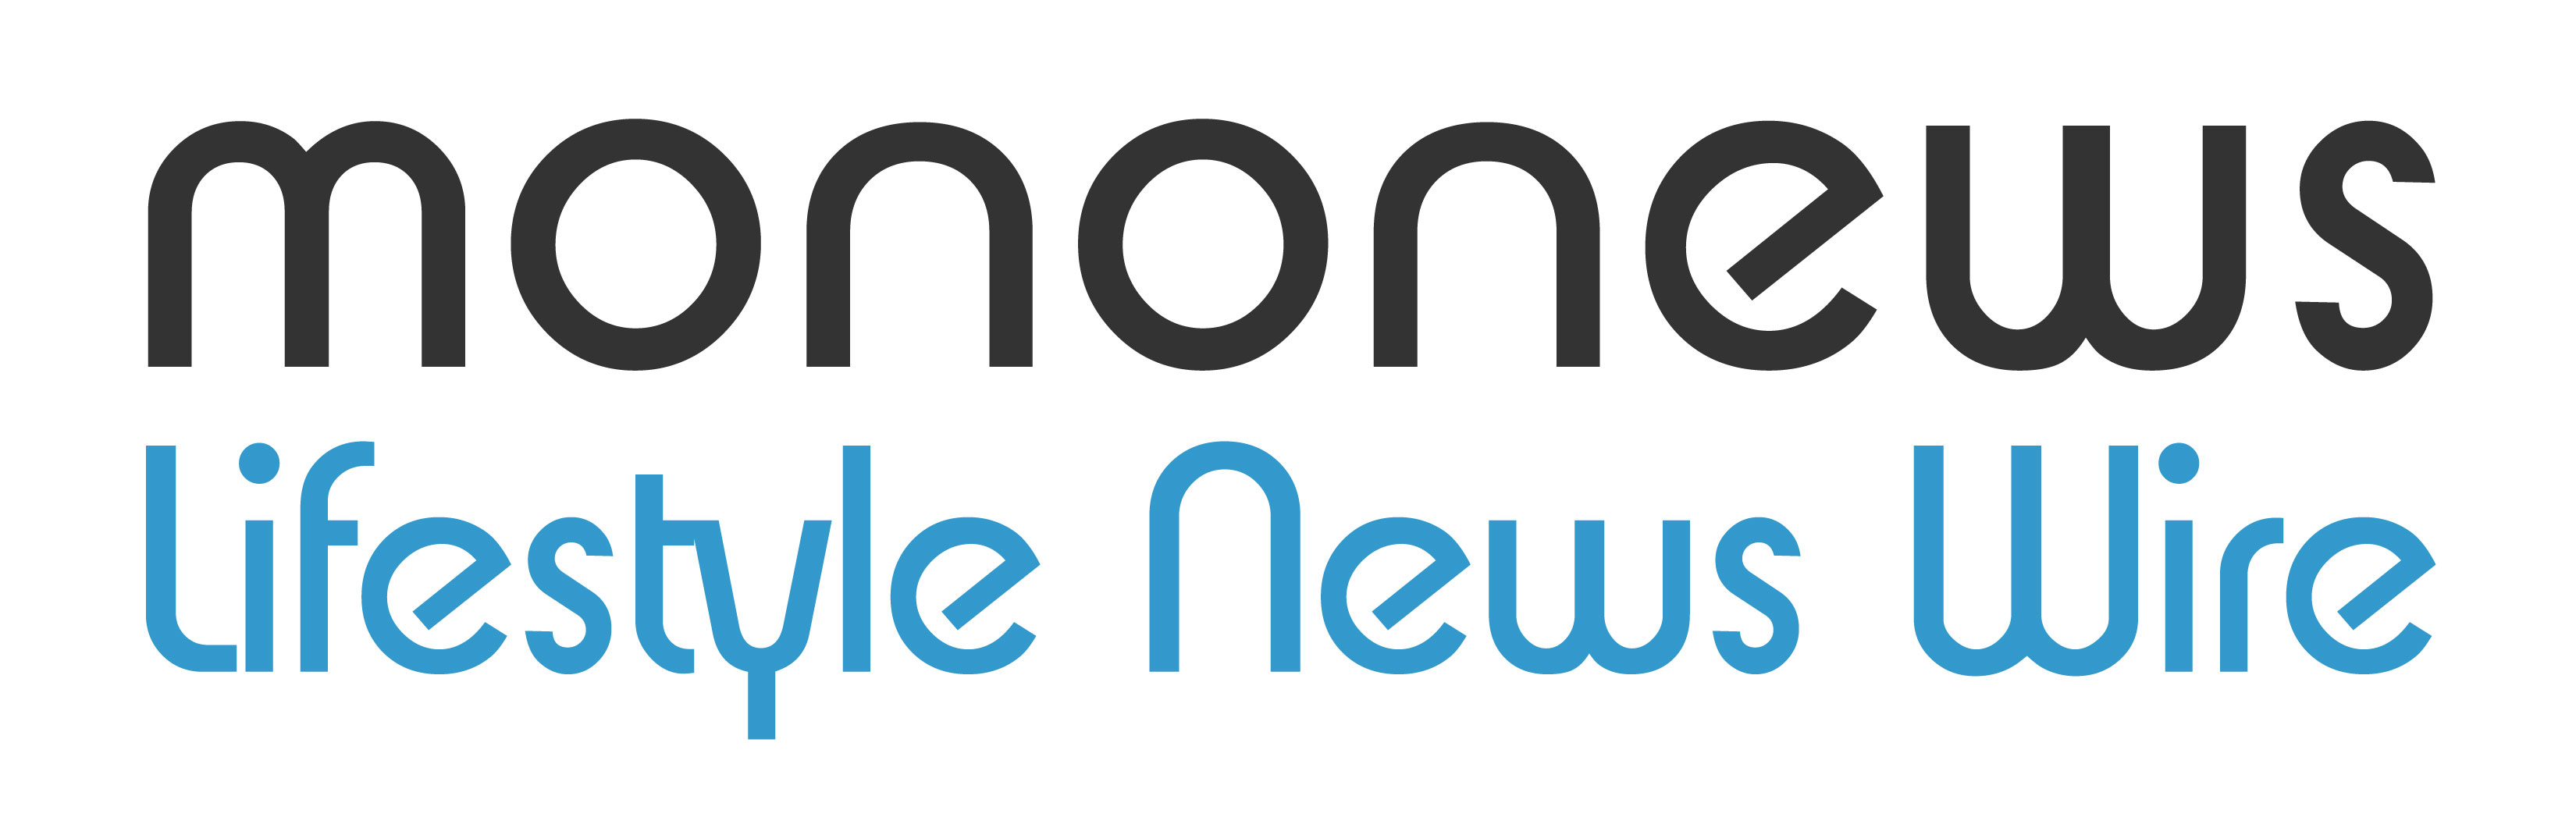 mononews